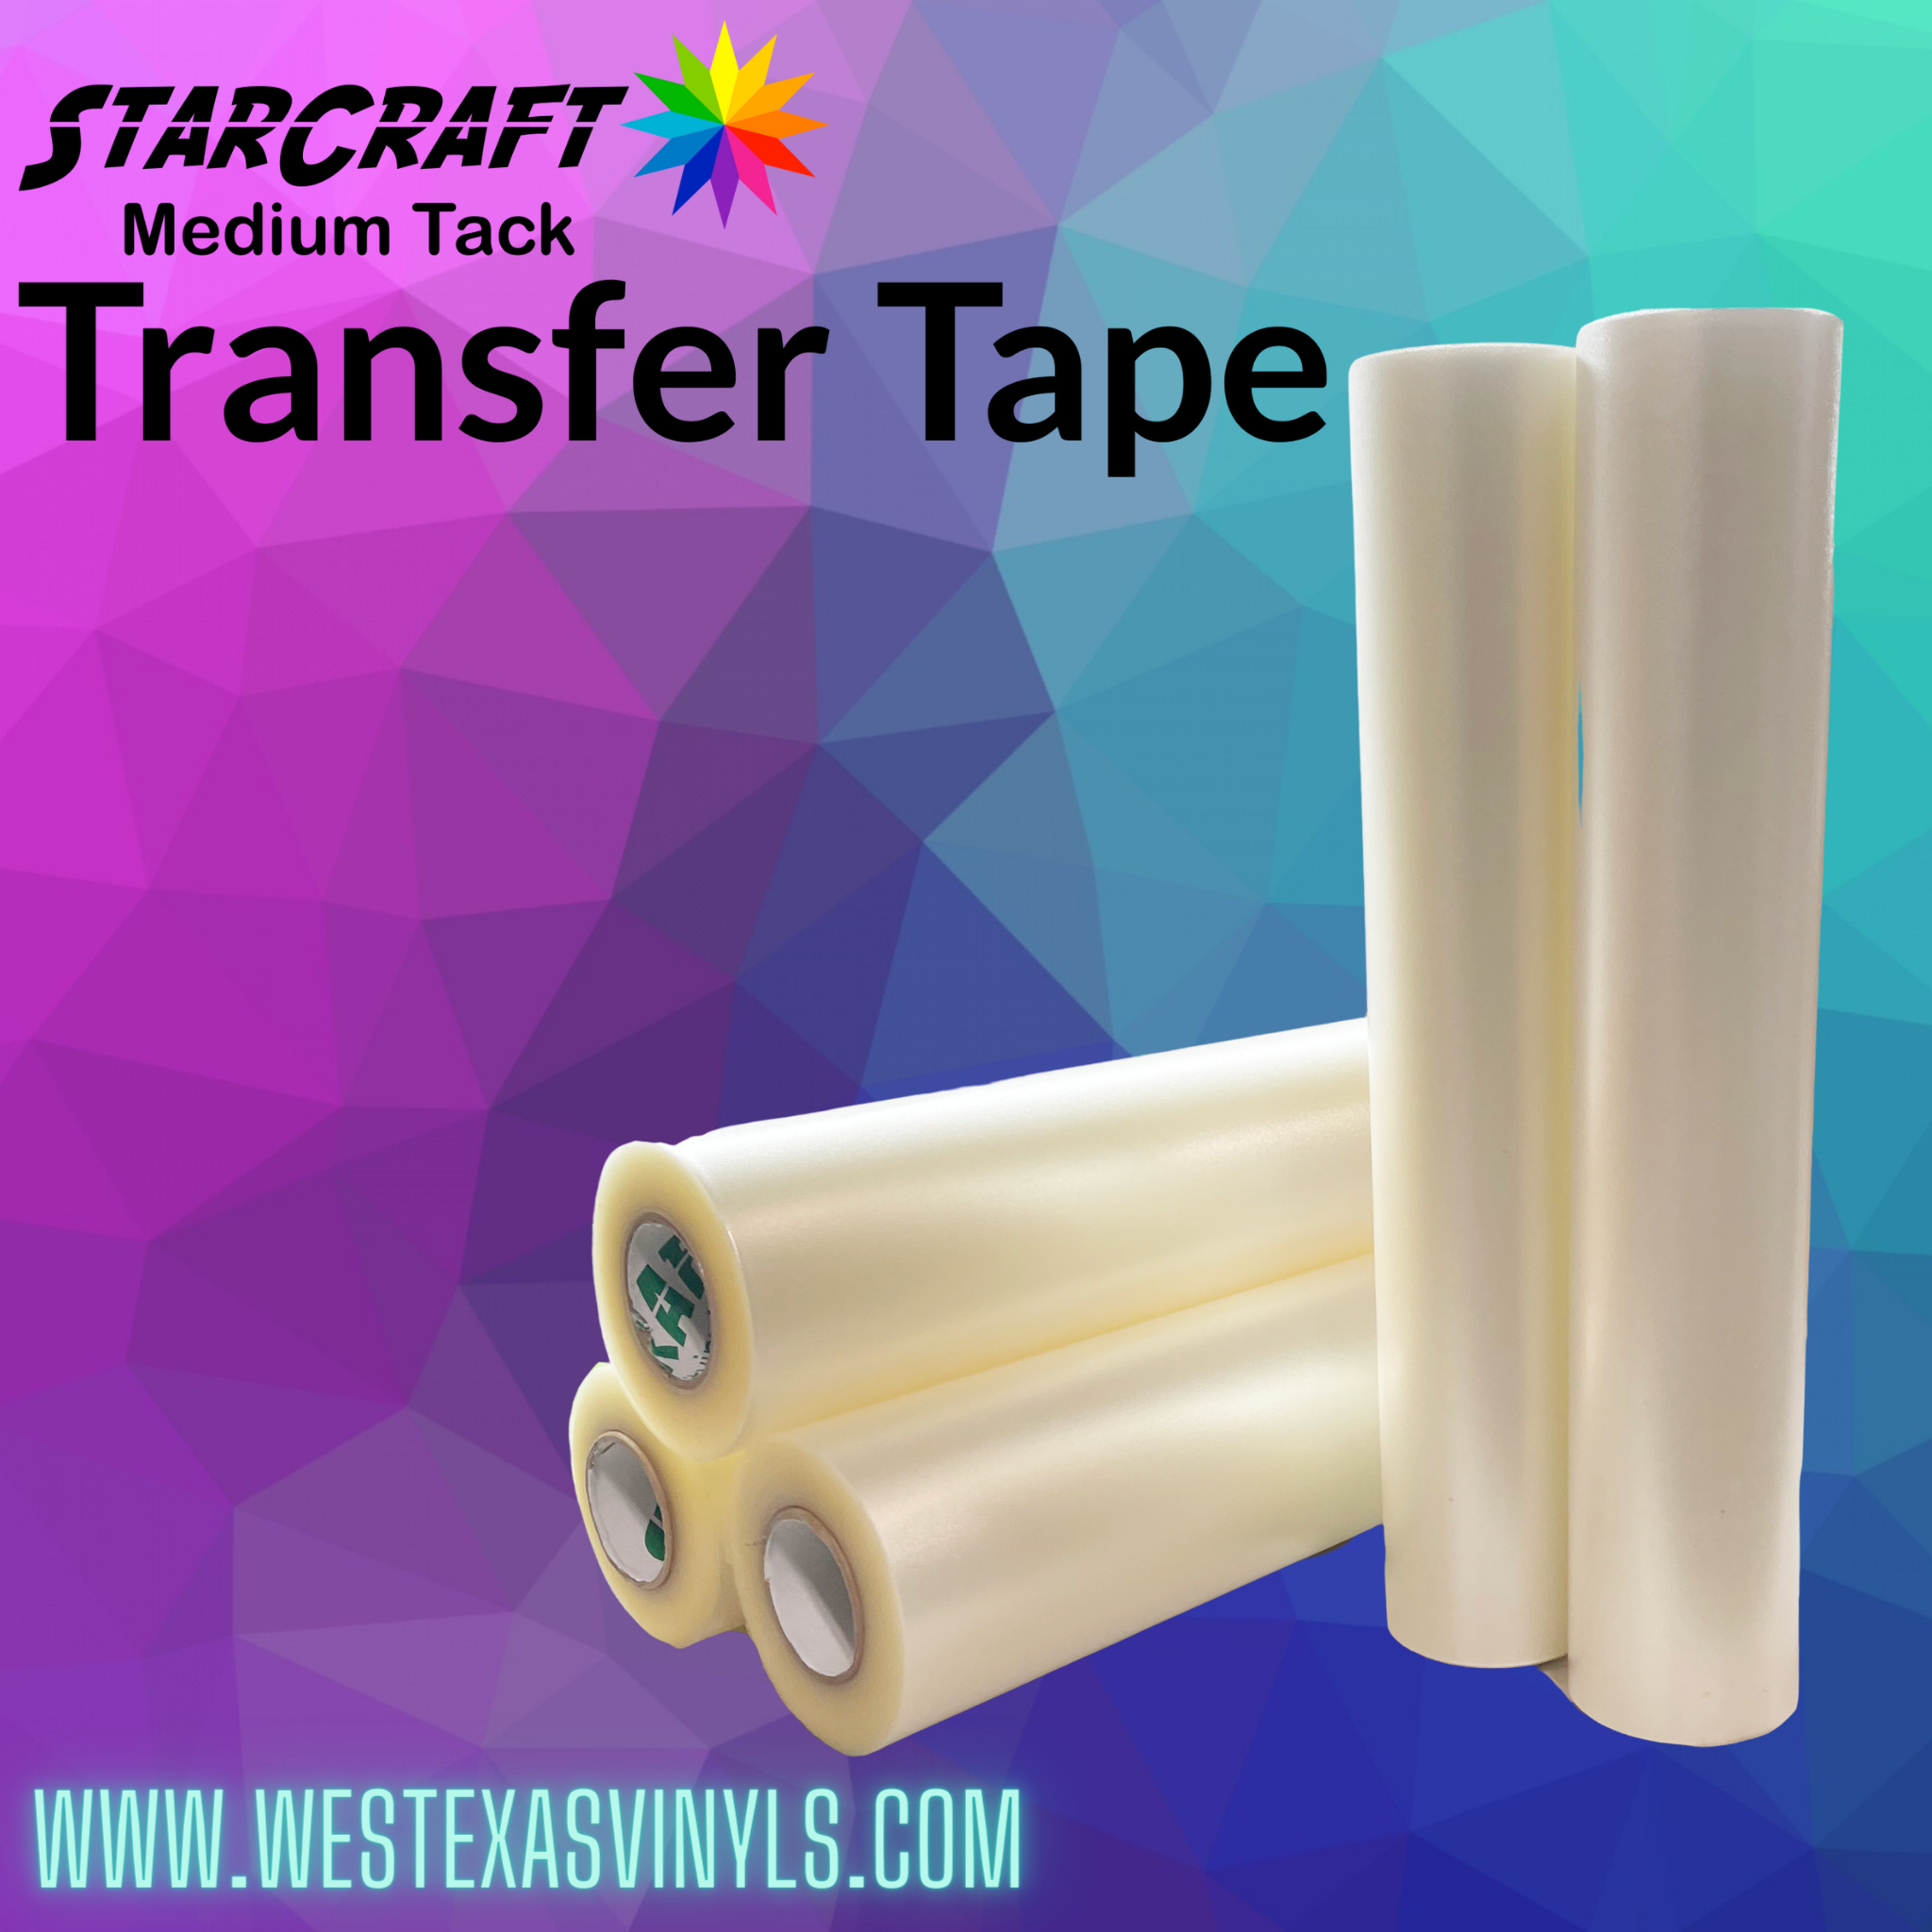 Starcraft Transfer Tape